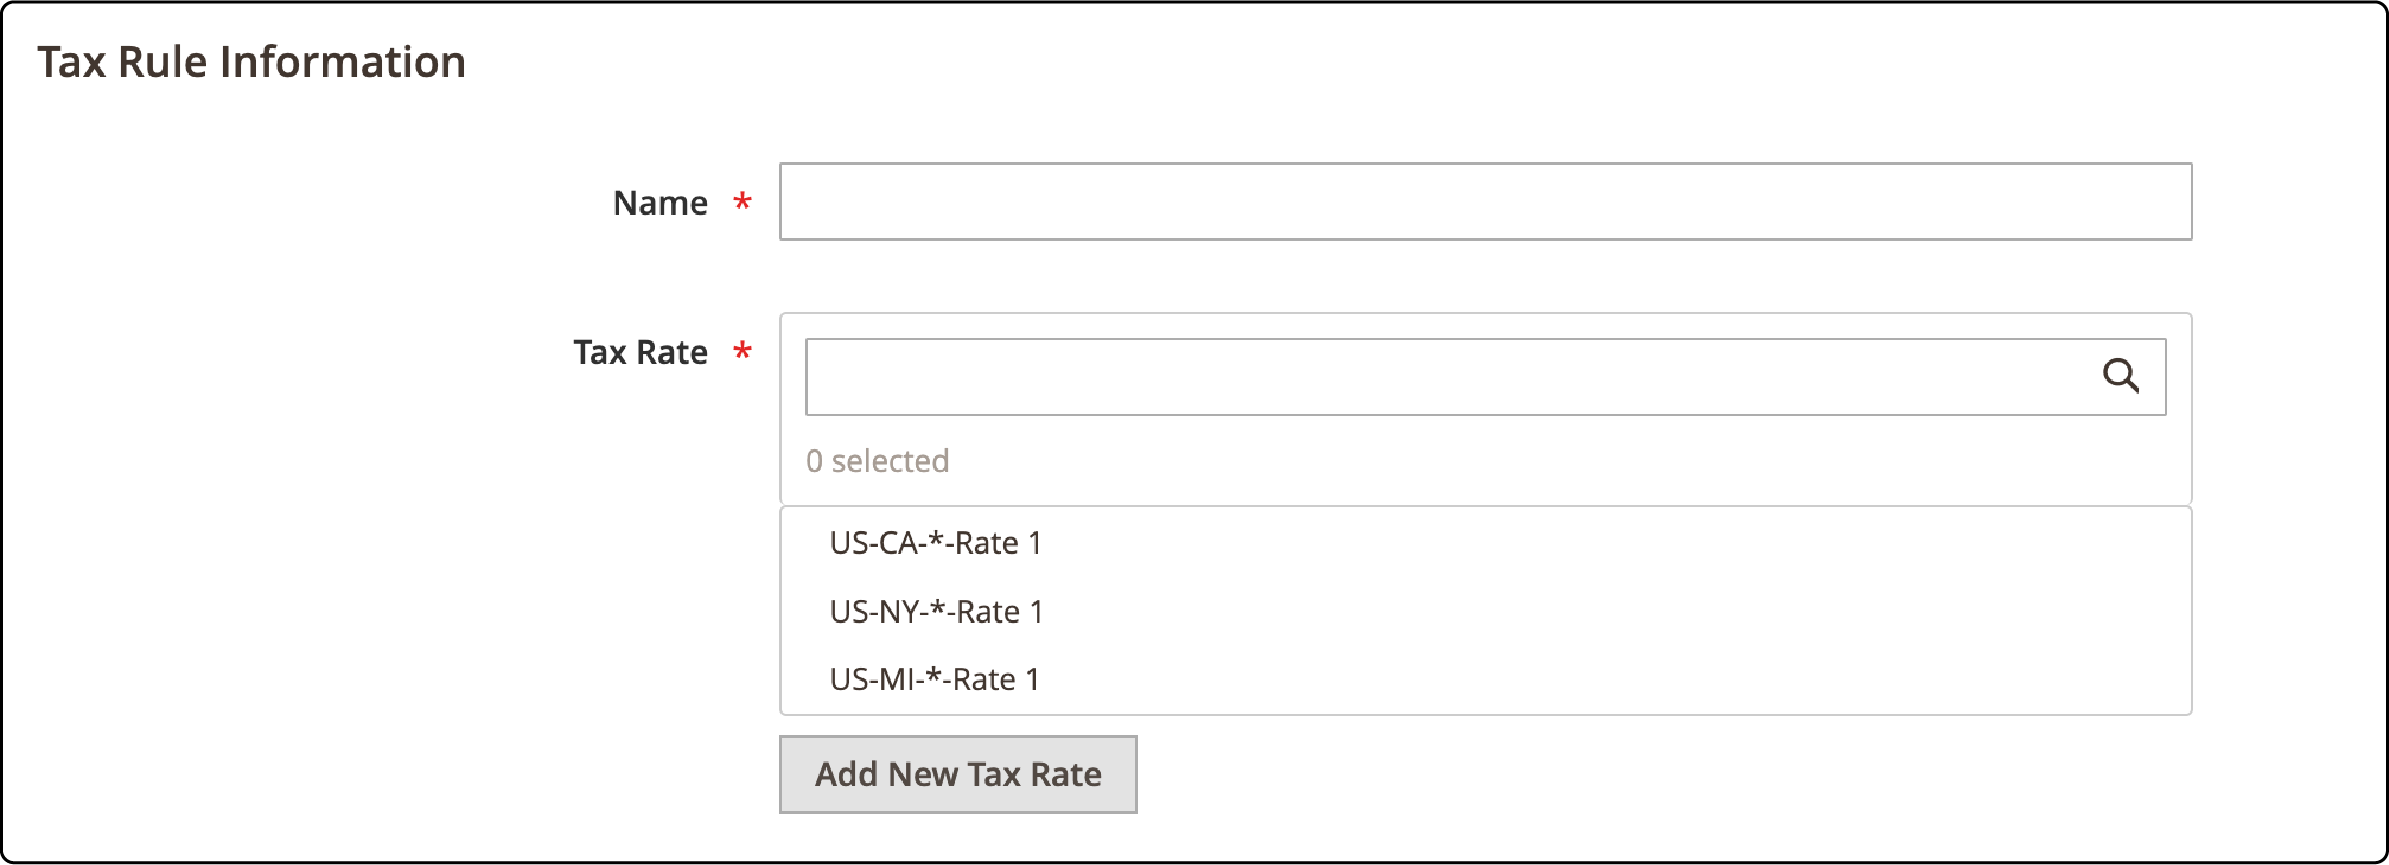 Magento 2 Tax Rule Information Setup